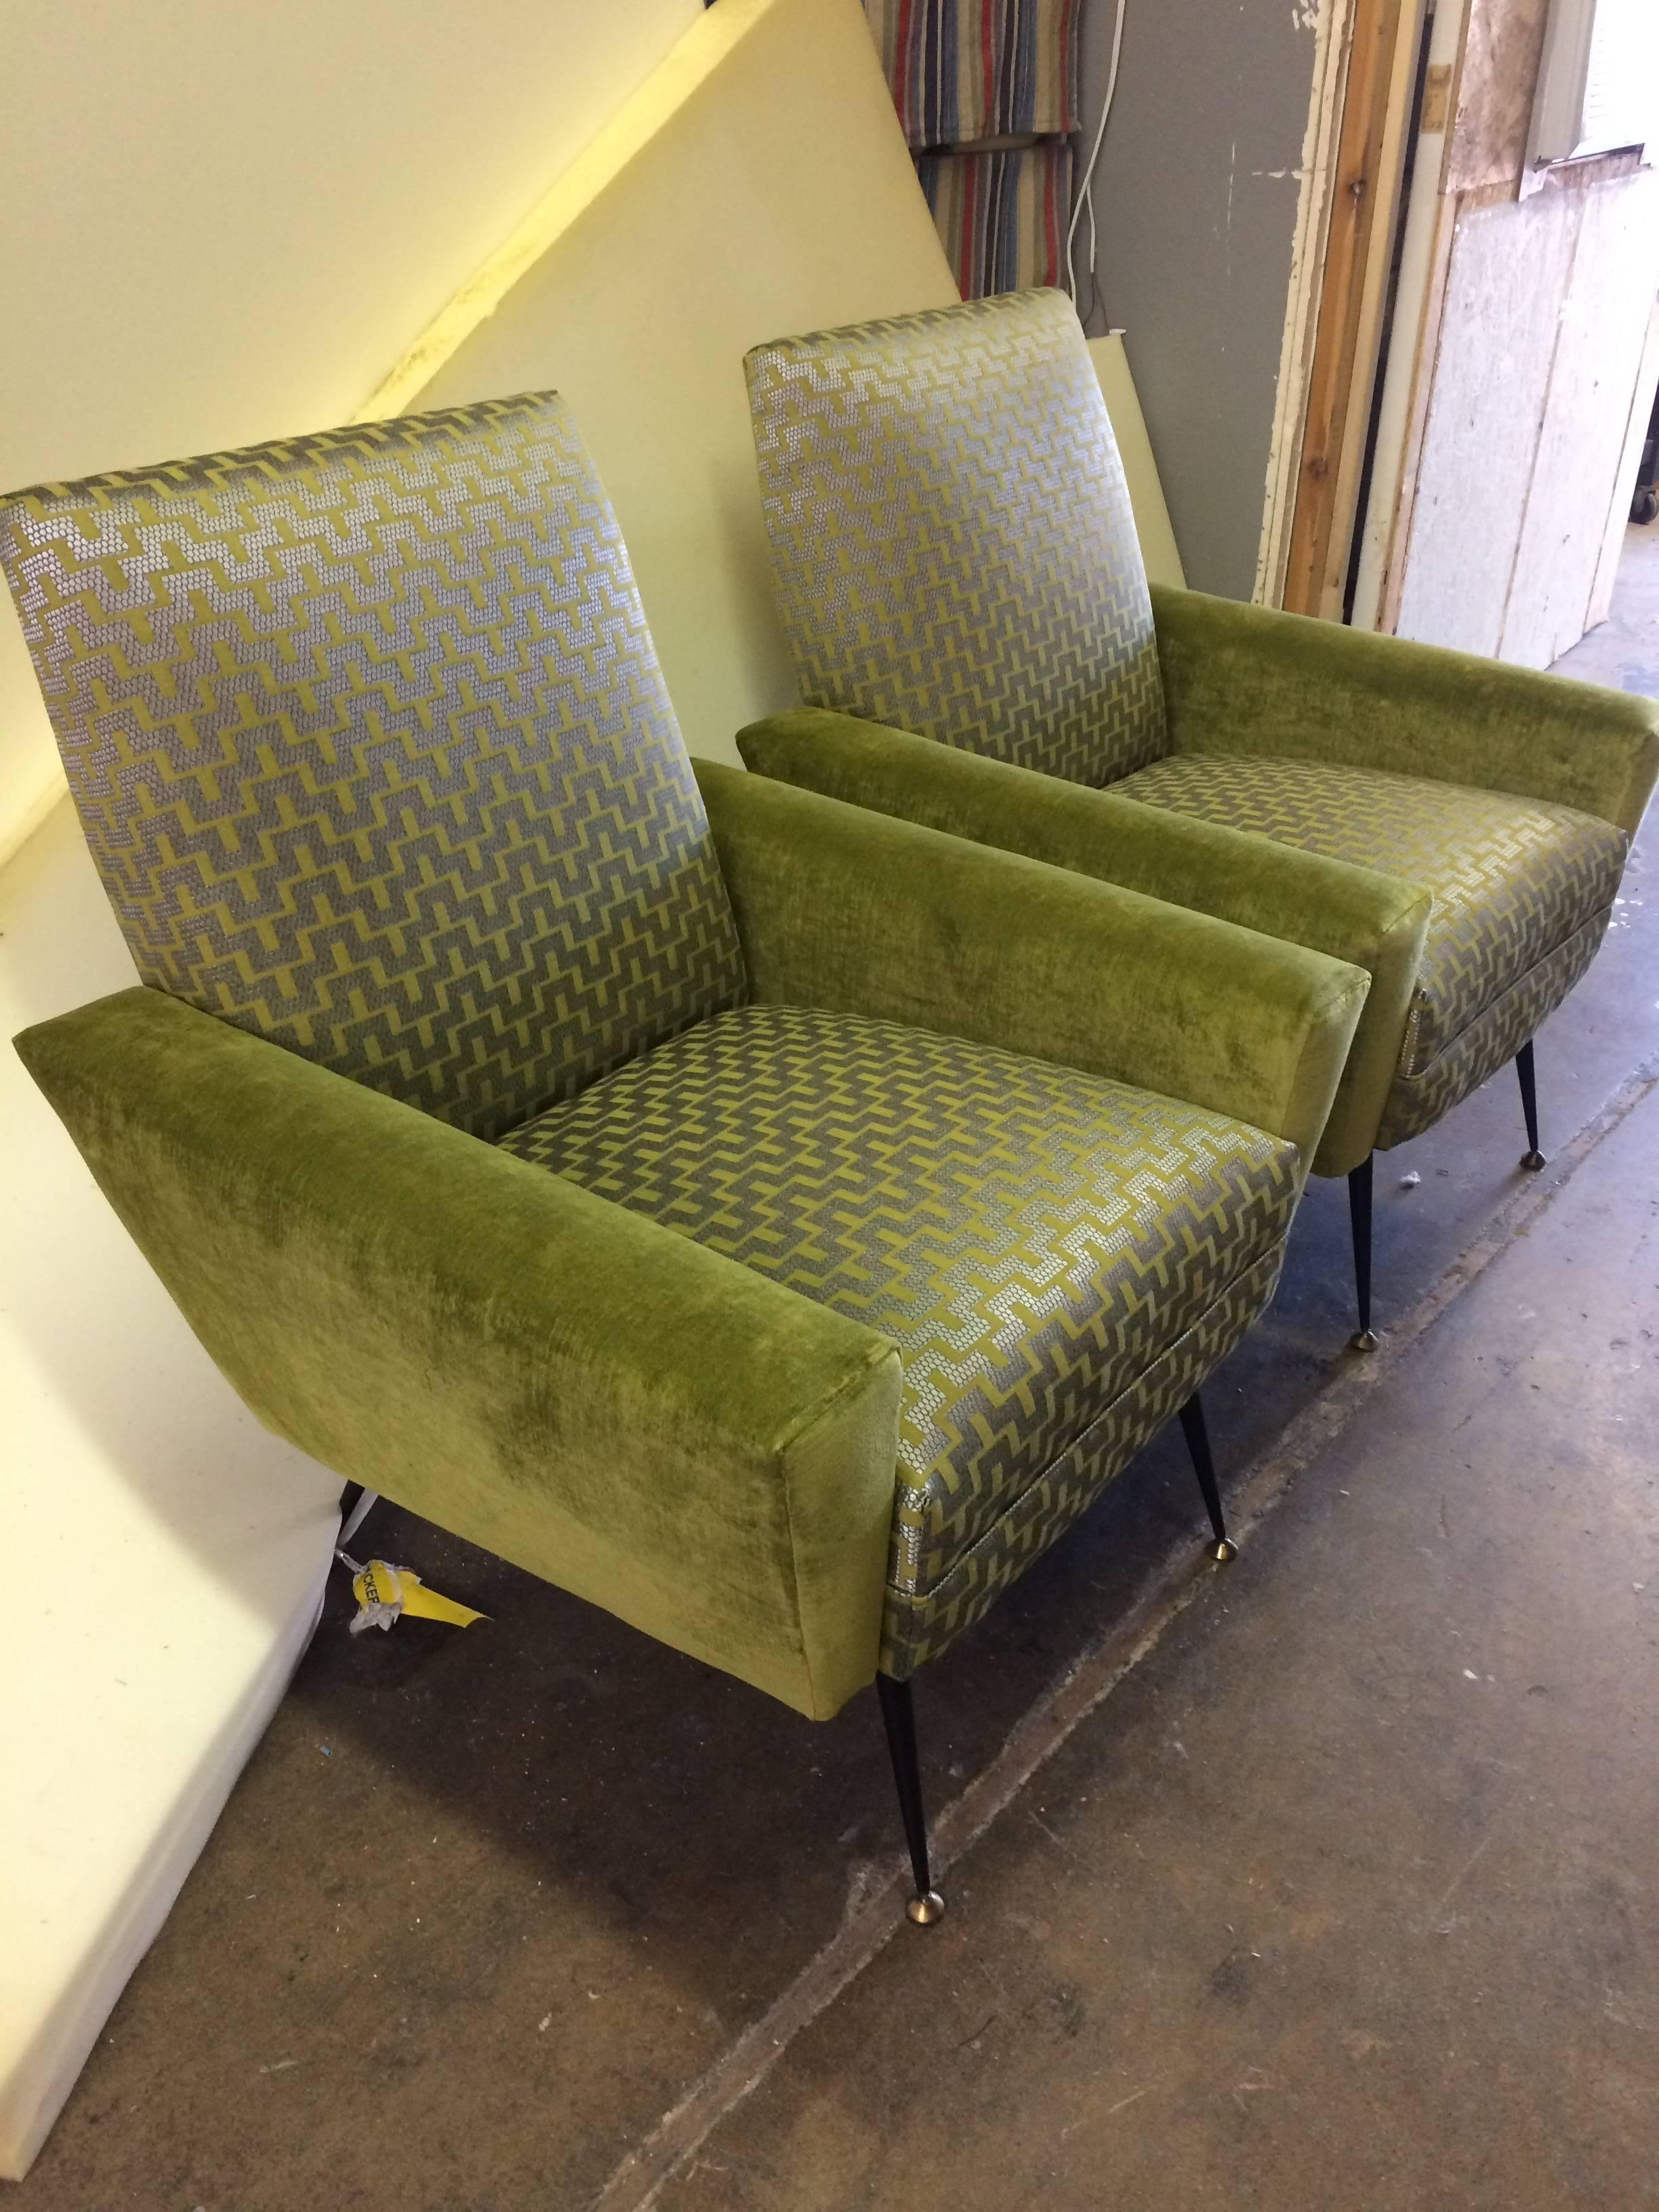 Midcentury Italian chairs by Gianfranco Frattini. New custom-made upholstery.